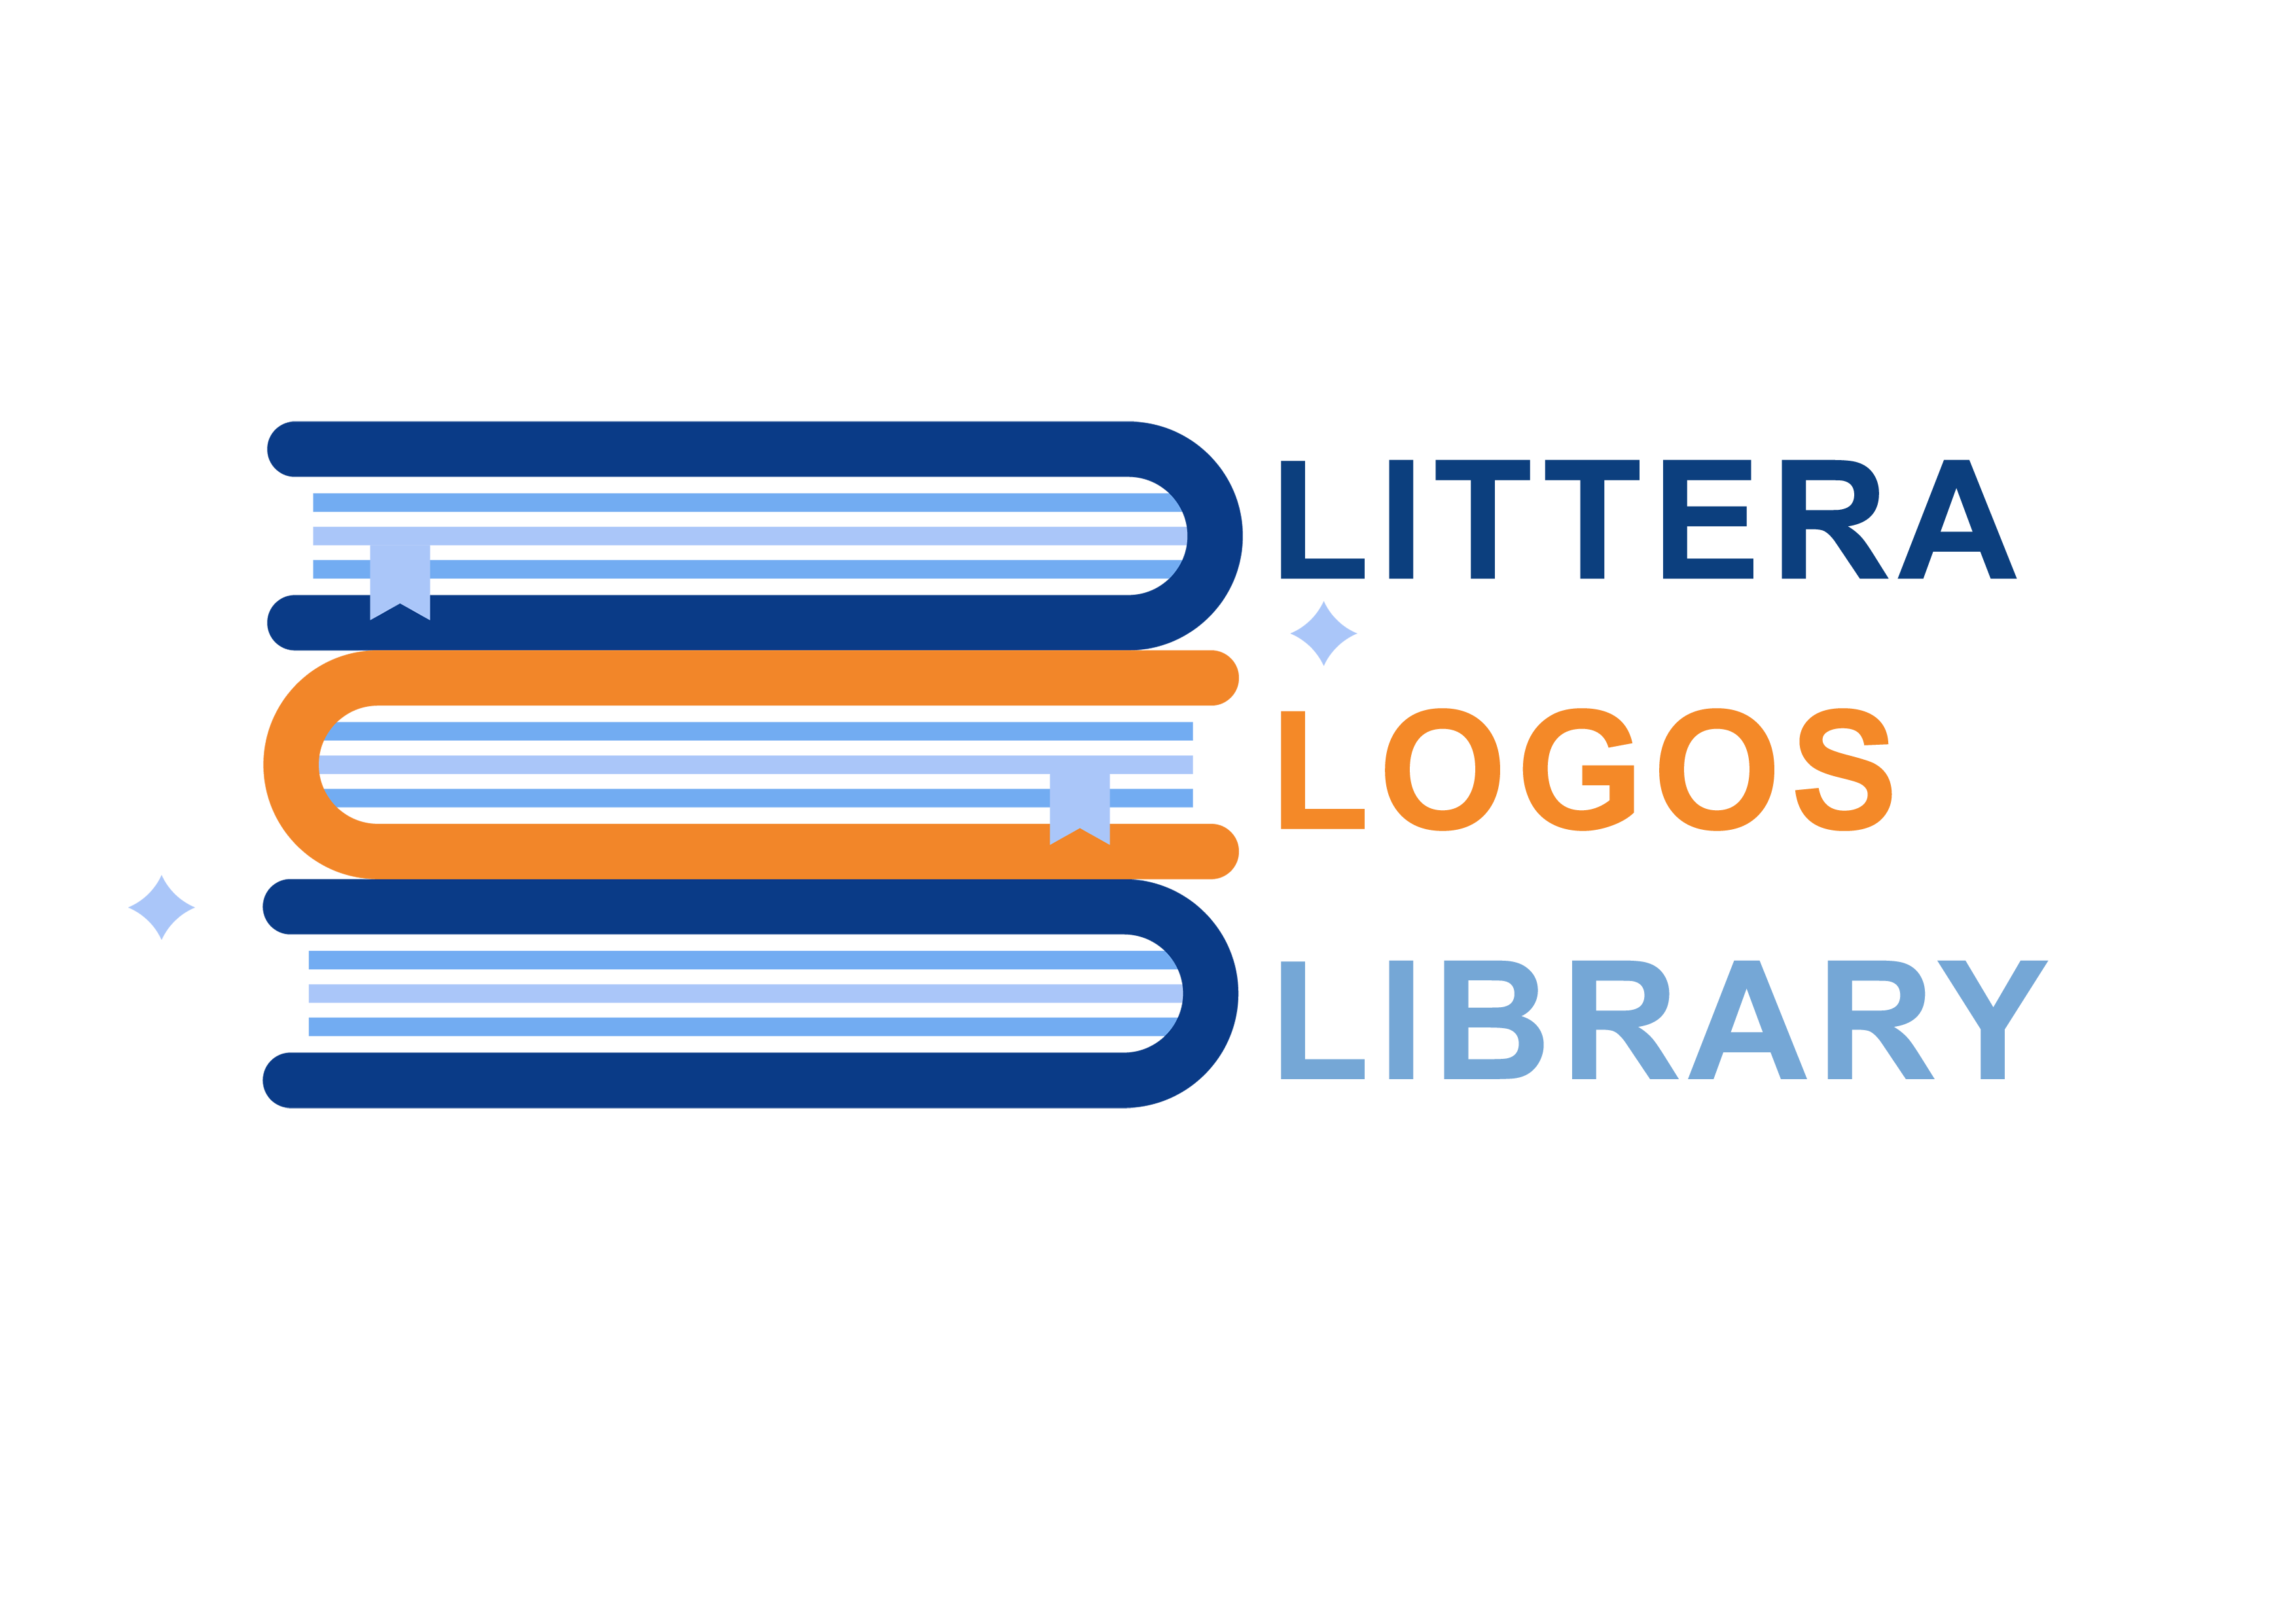 Littera, Logos, Library